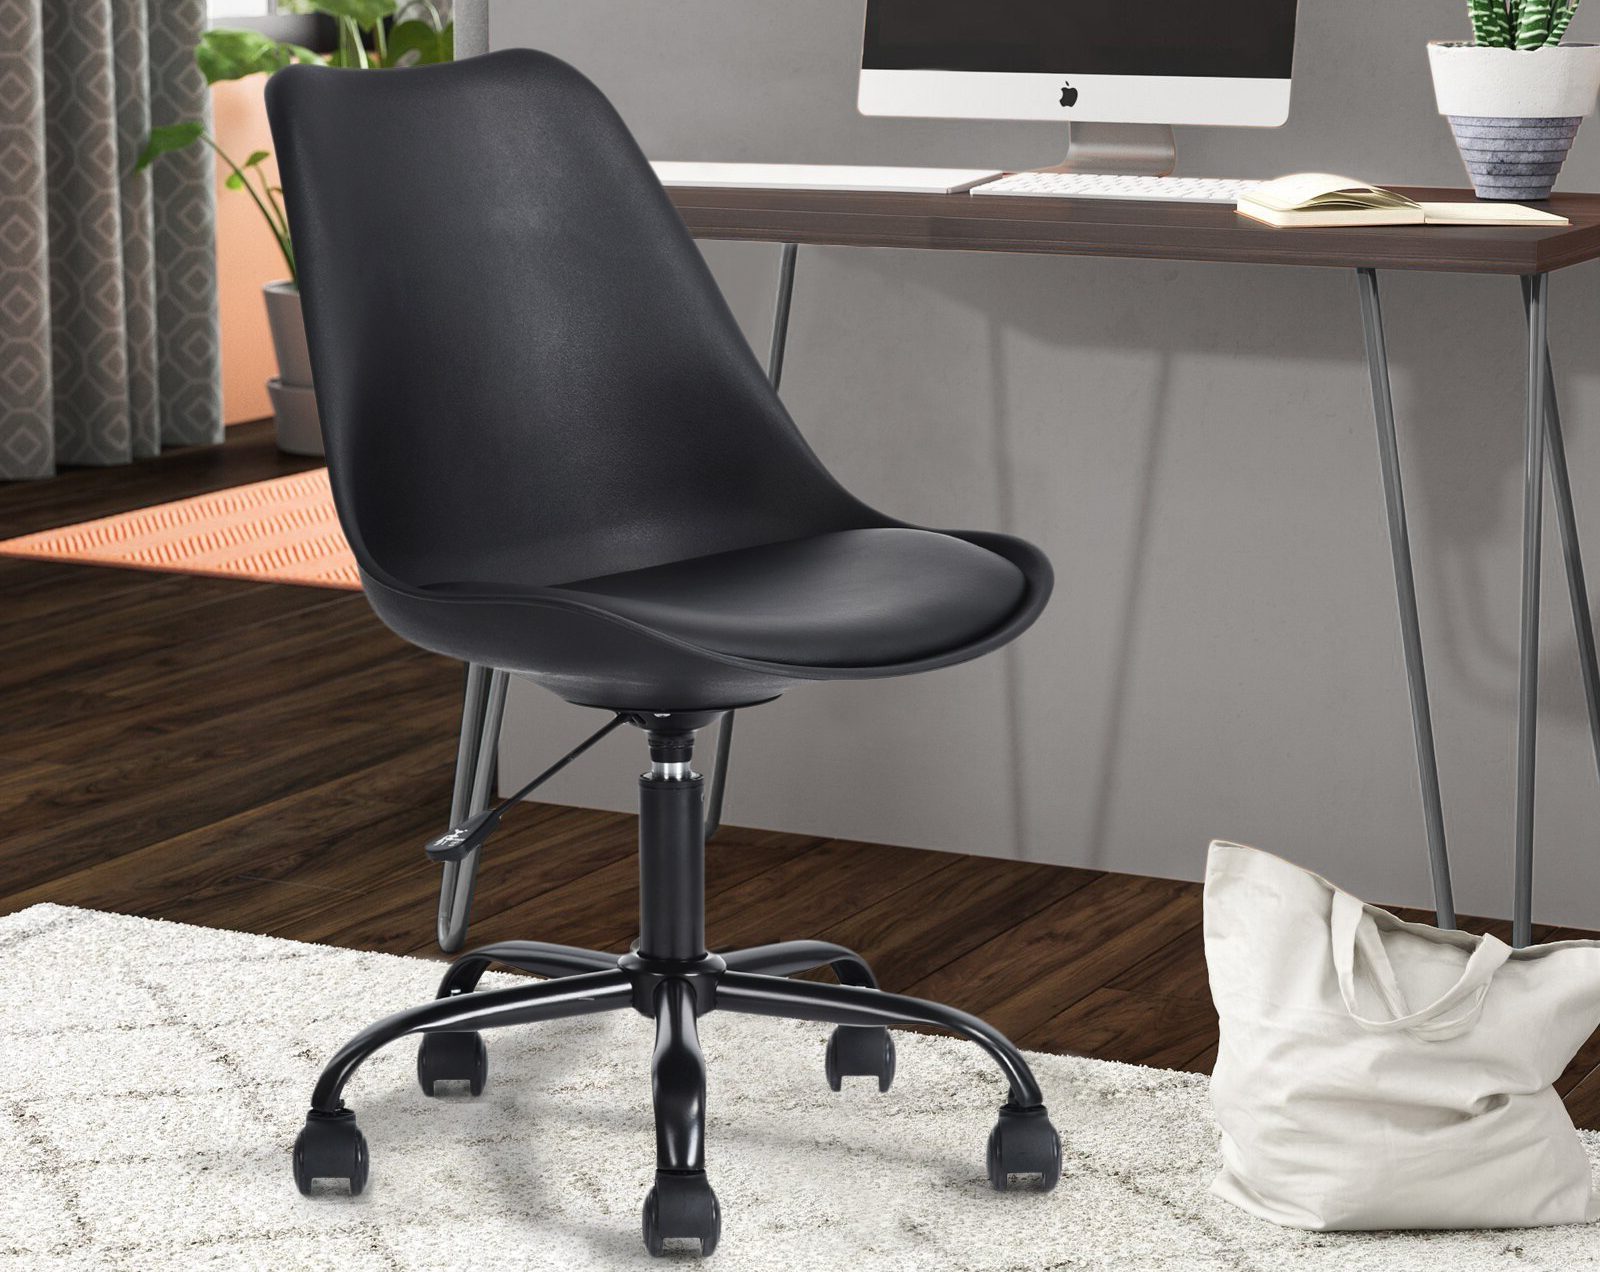 Comfort plastic chair price for office - Atila